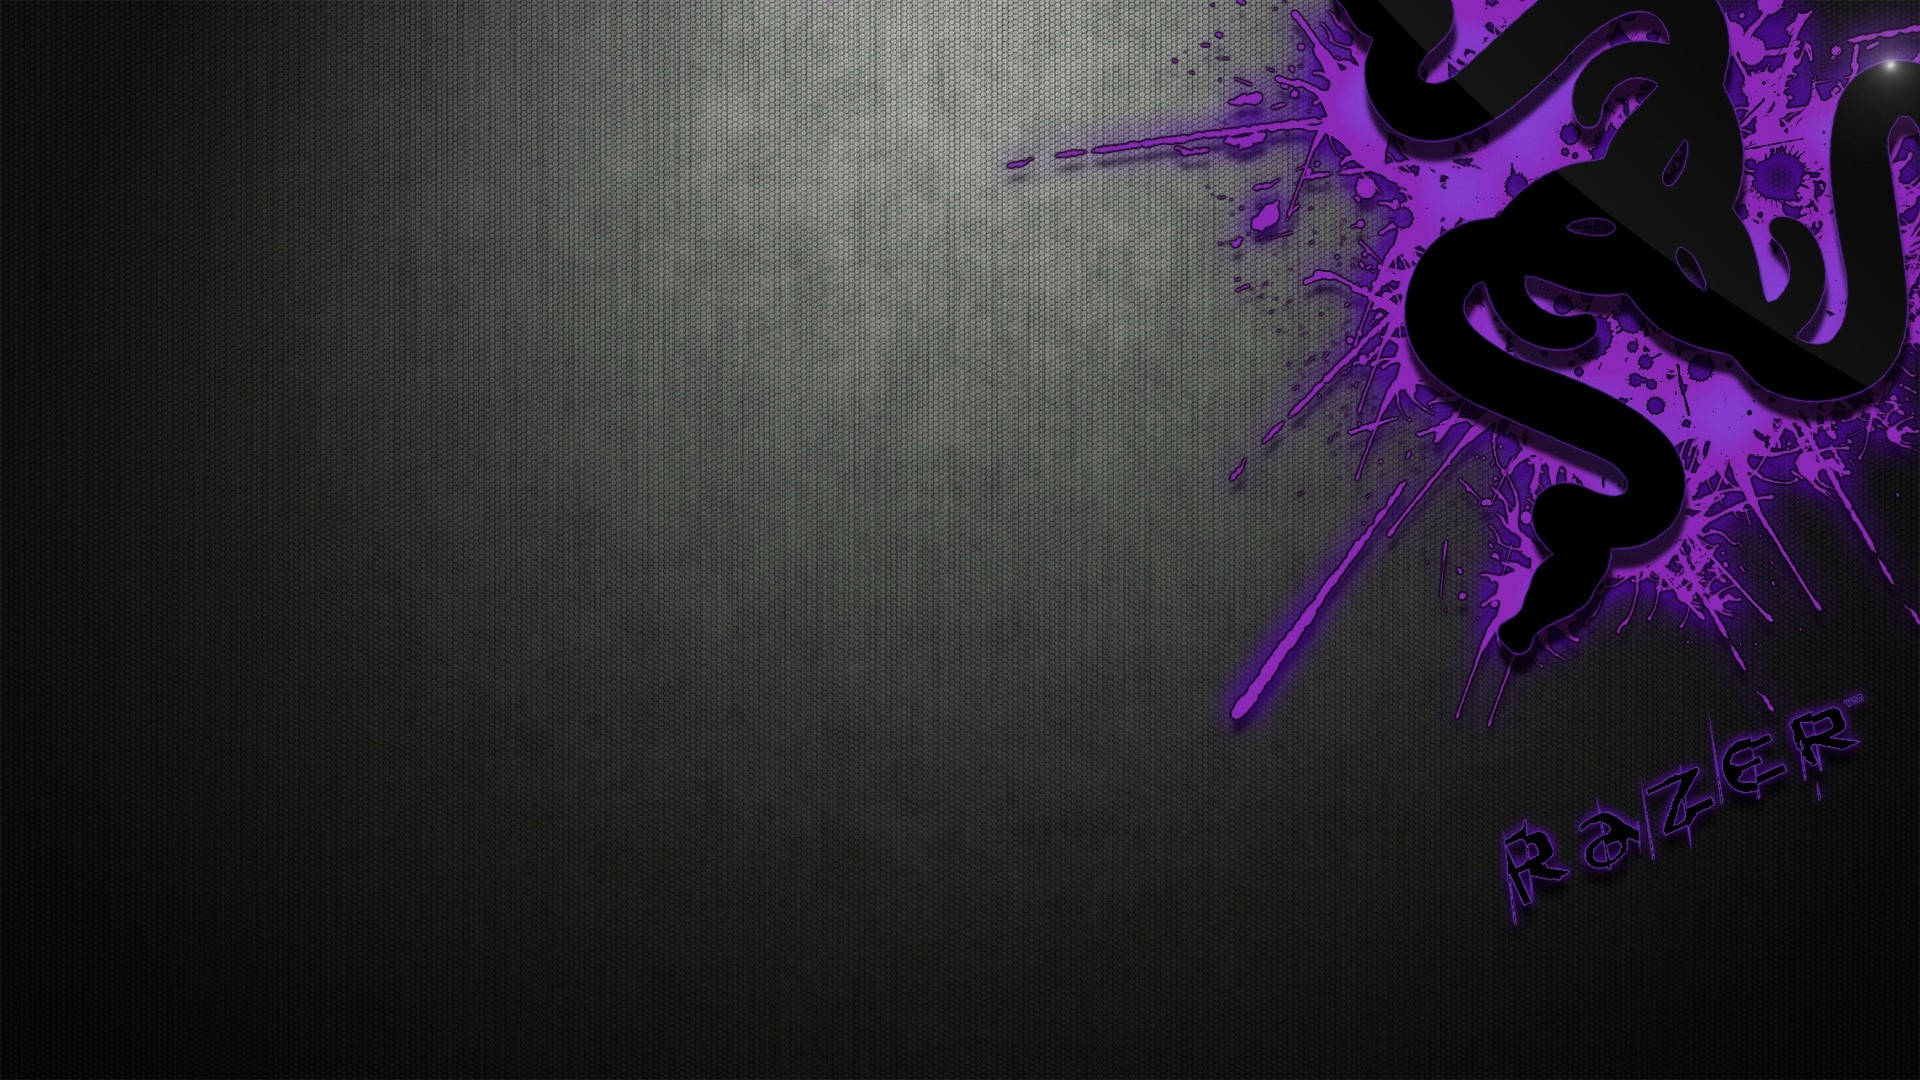 Fronterade Dragón Negro De Juegos Púrpura Para Escritorio Fondo de pantalla